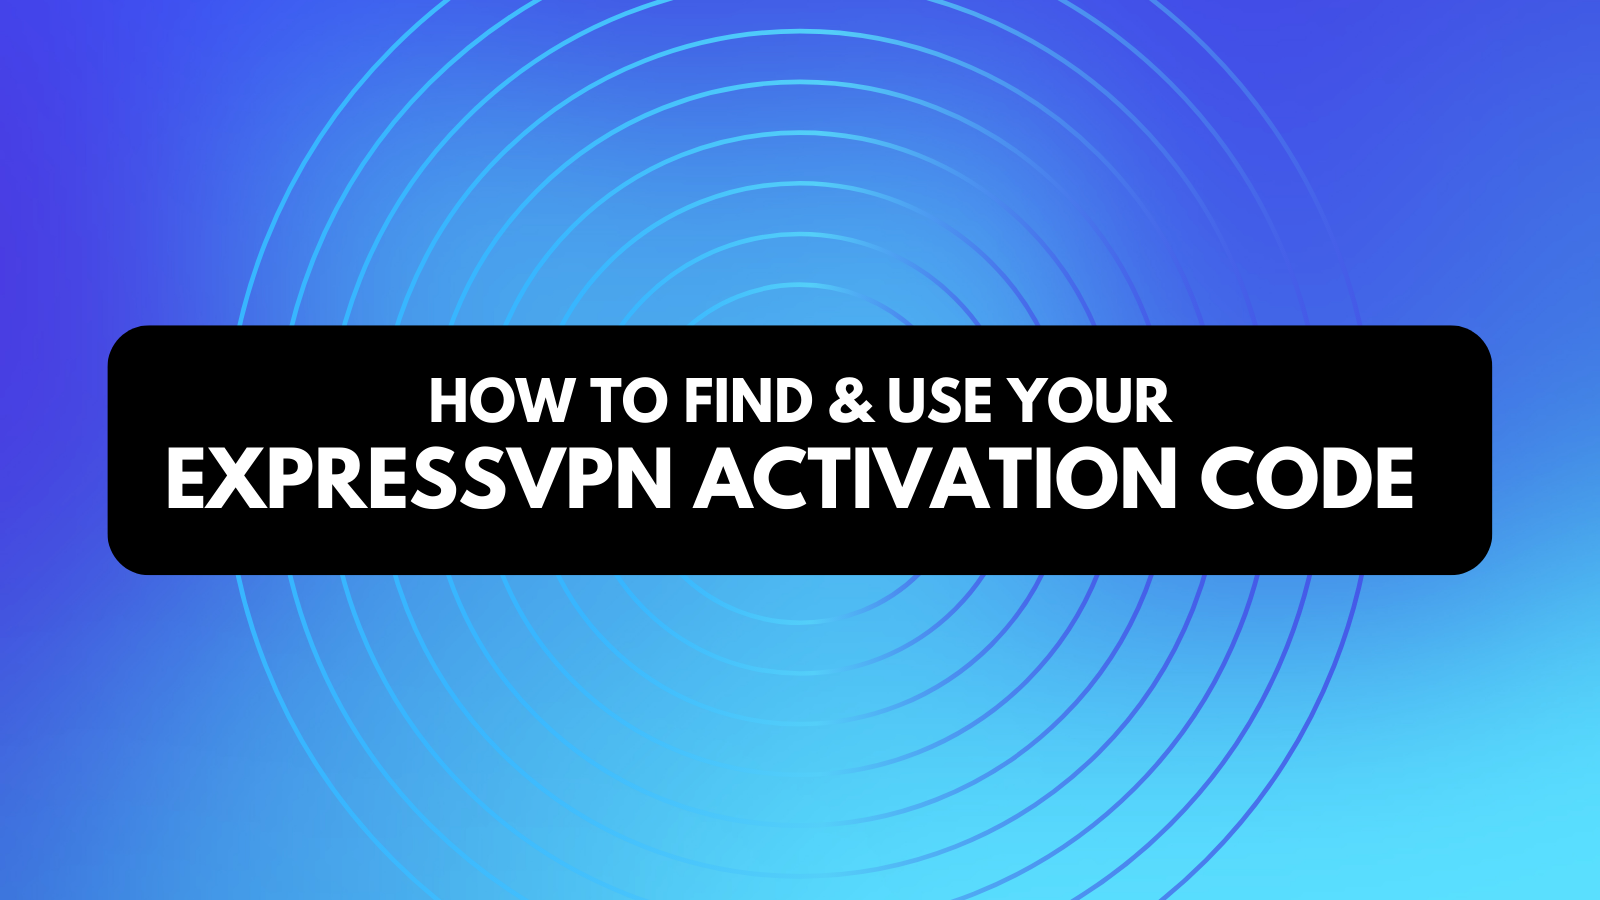 expressvpn activation code free